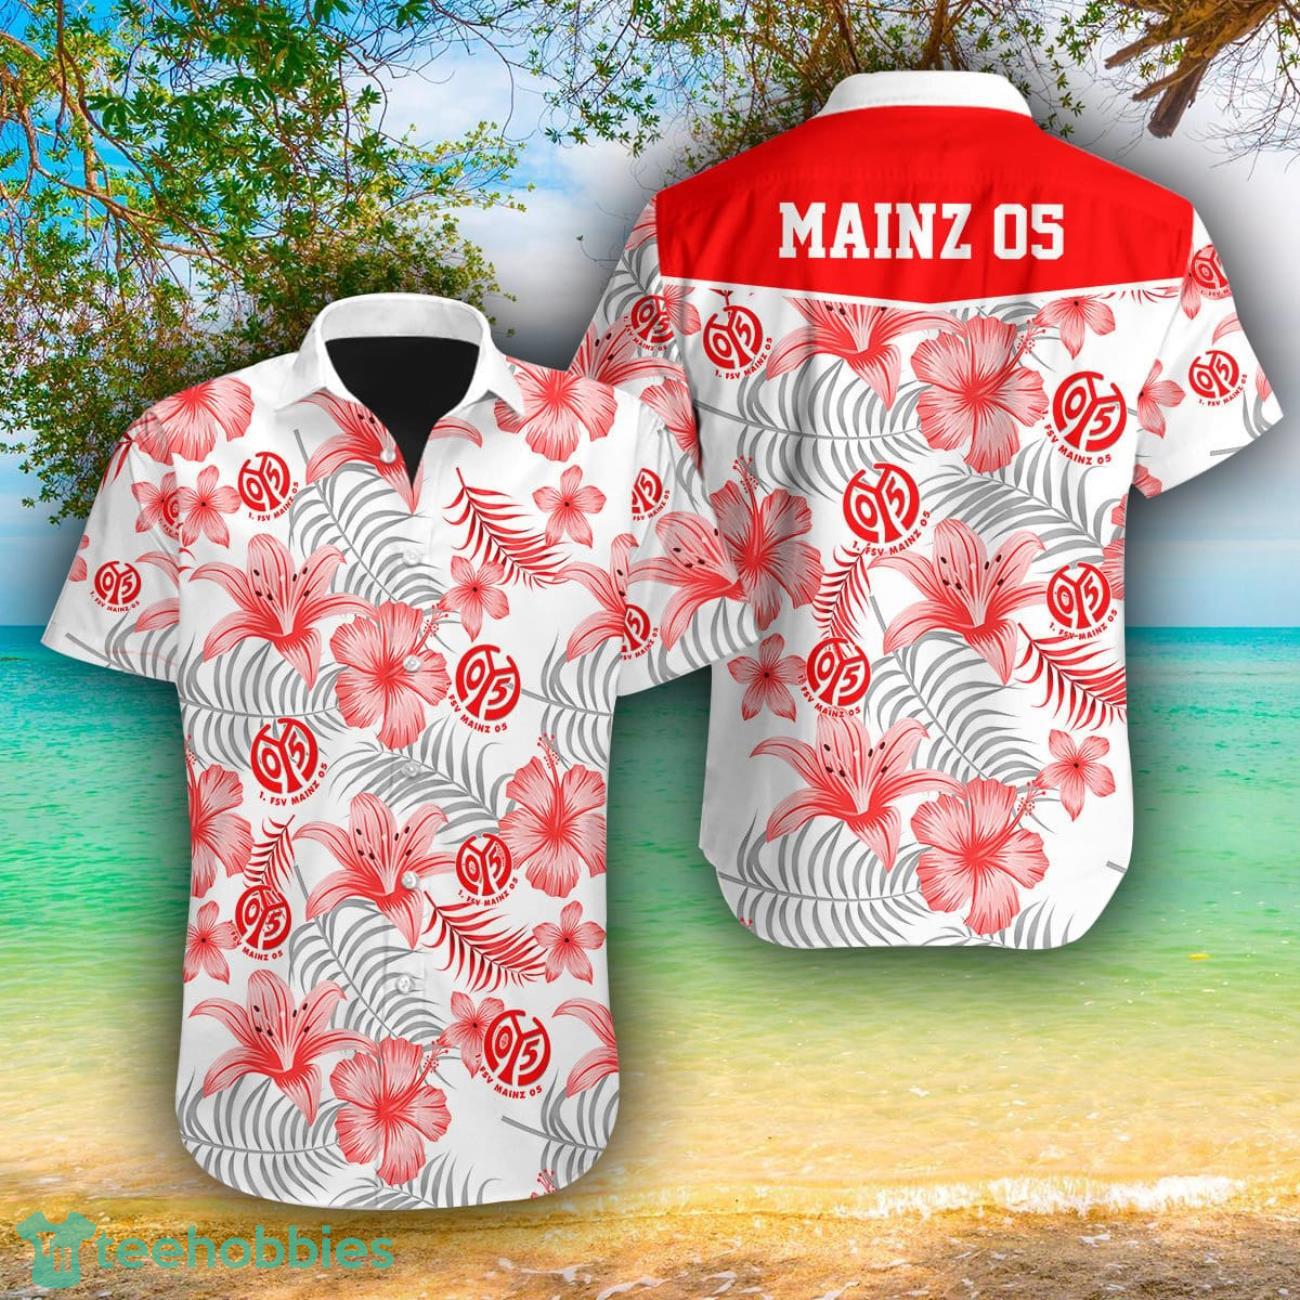 Mainz 05 AOP Hawaiian Shirt For Men And Women Summer Gift Product Photo 1